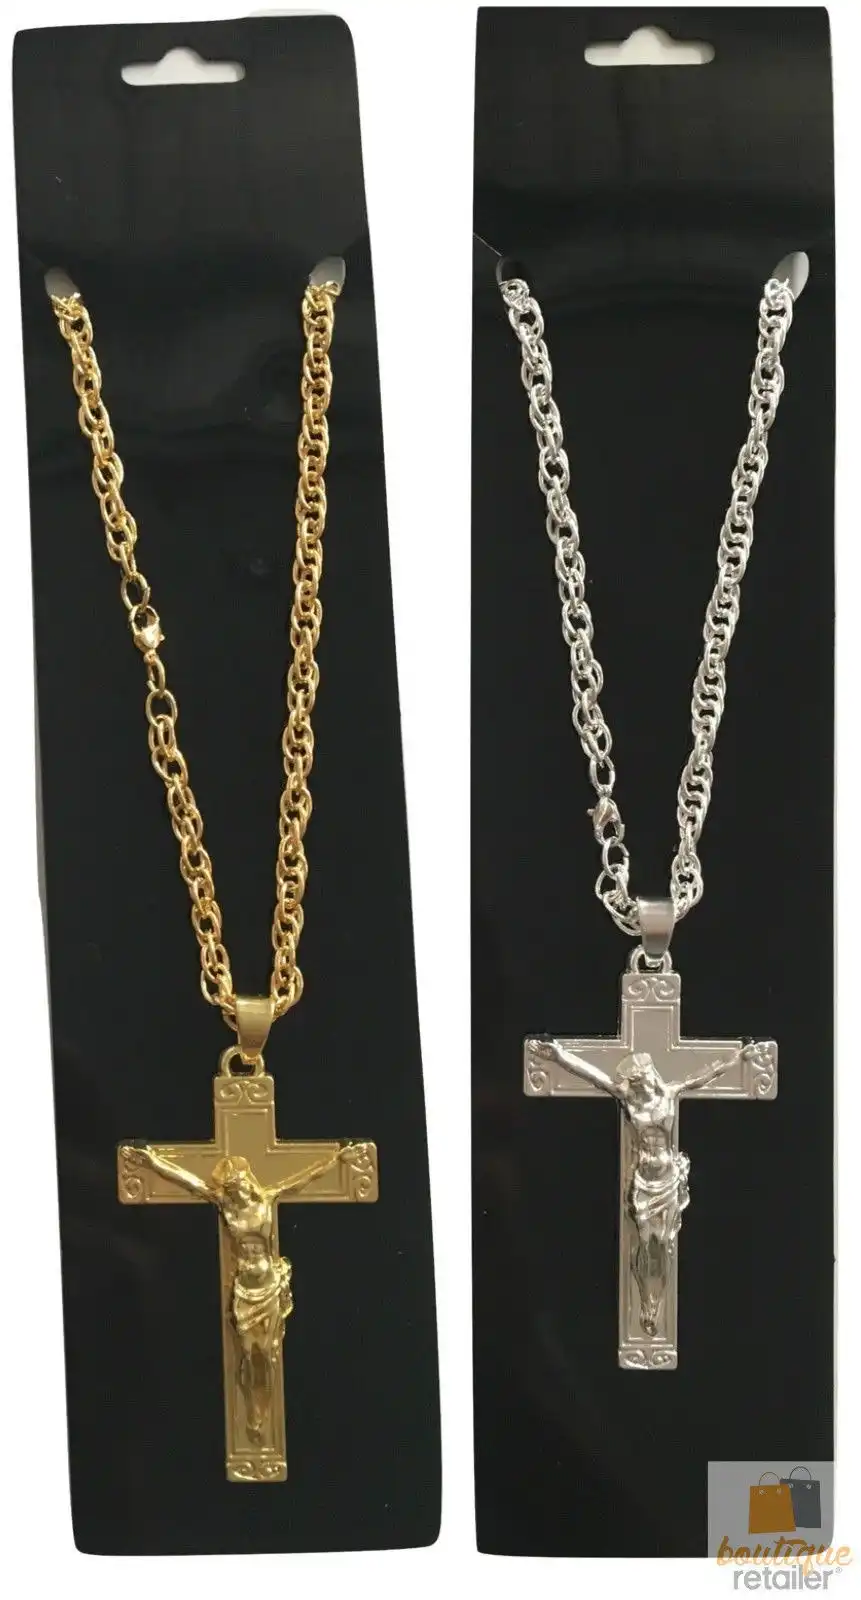 Jesus Christ Metal Necklace Chain Pendant Chain Jewellery Crucifix